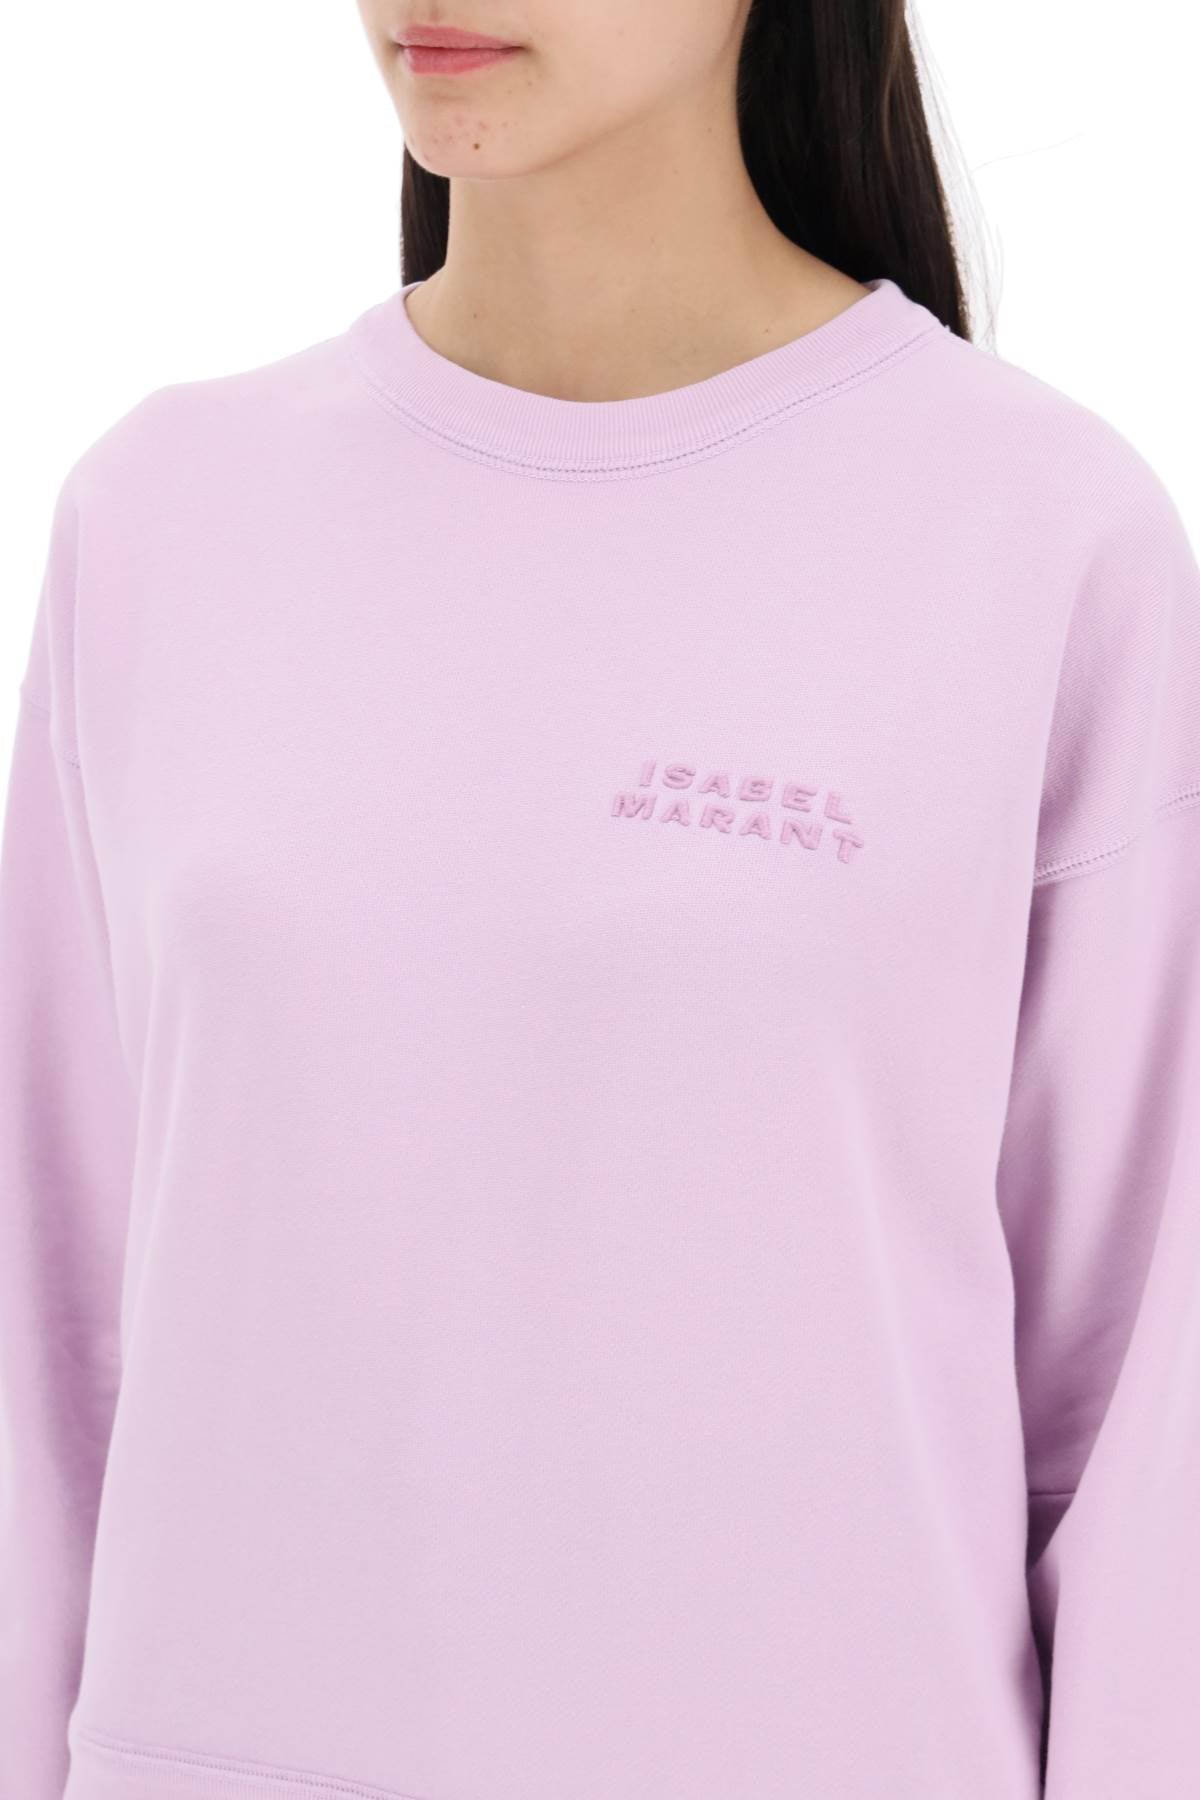 Isabel marant shad sweatshirt with logo embroidery-3